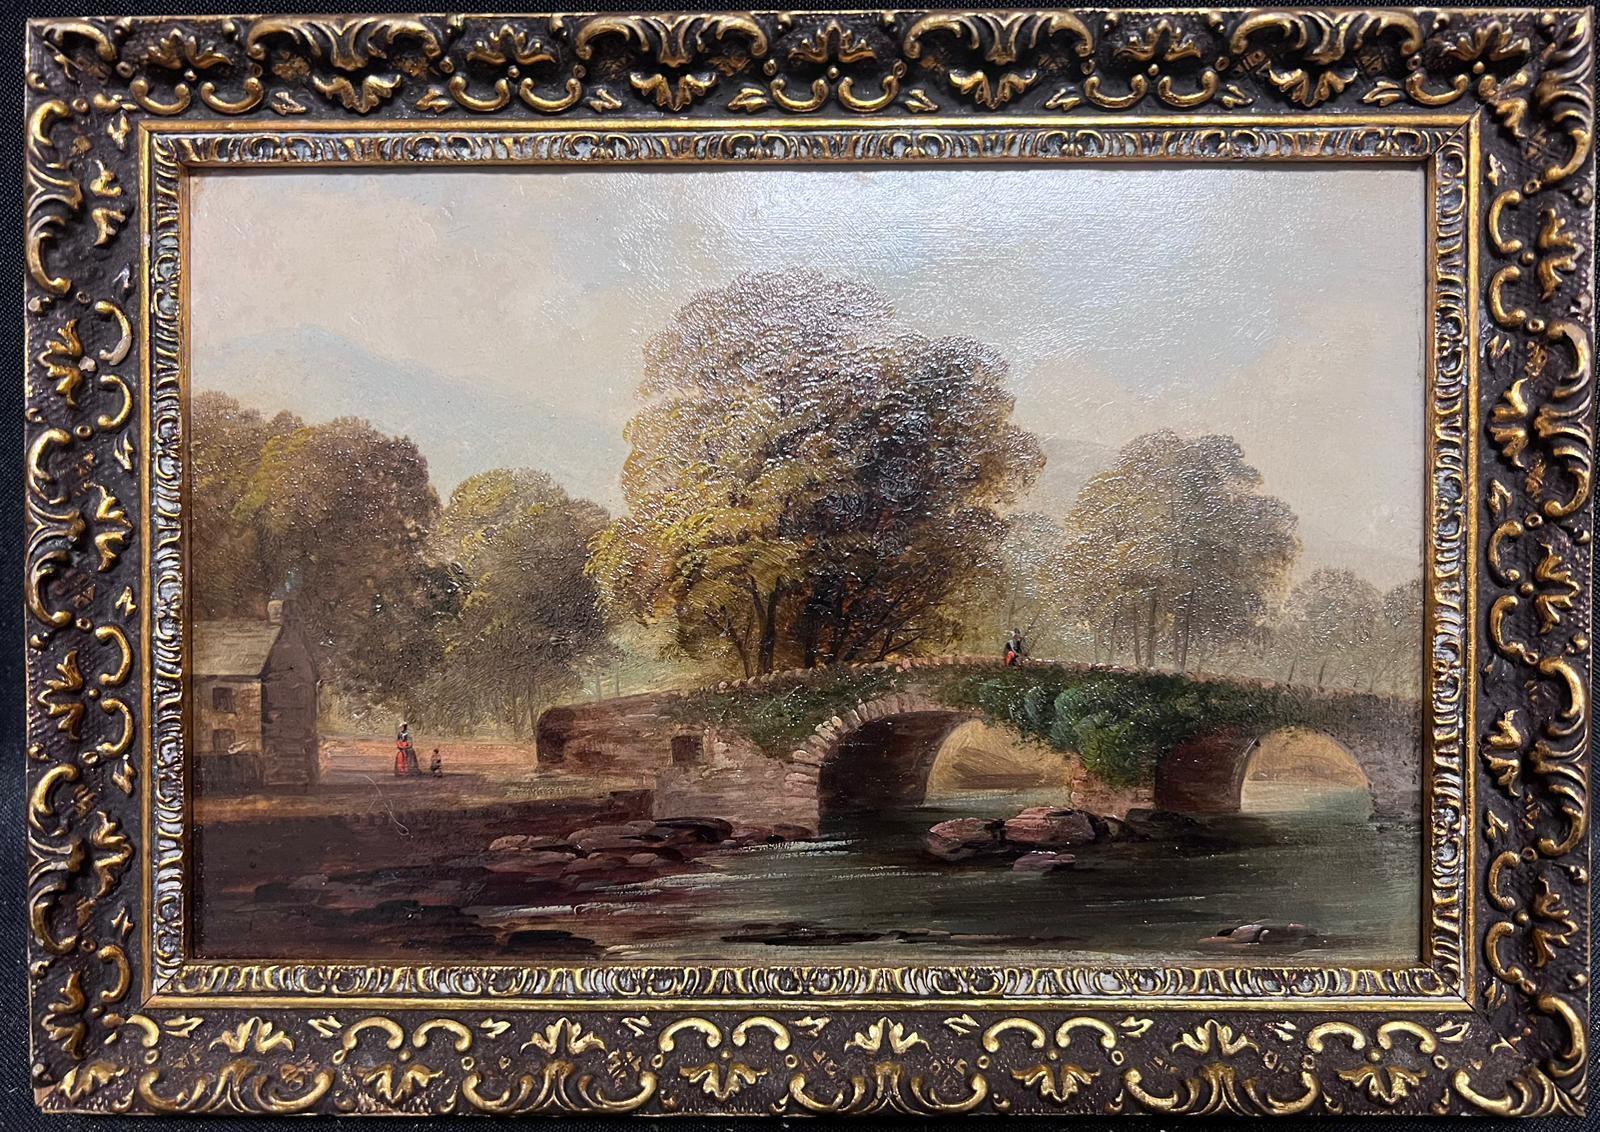 Welsh 19th Century Figurative Painting - Victorian Welsh Landscape Figure by Stone Bridge River Landscape Framed Oil 